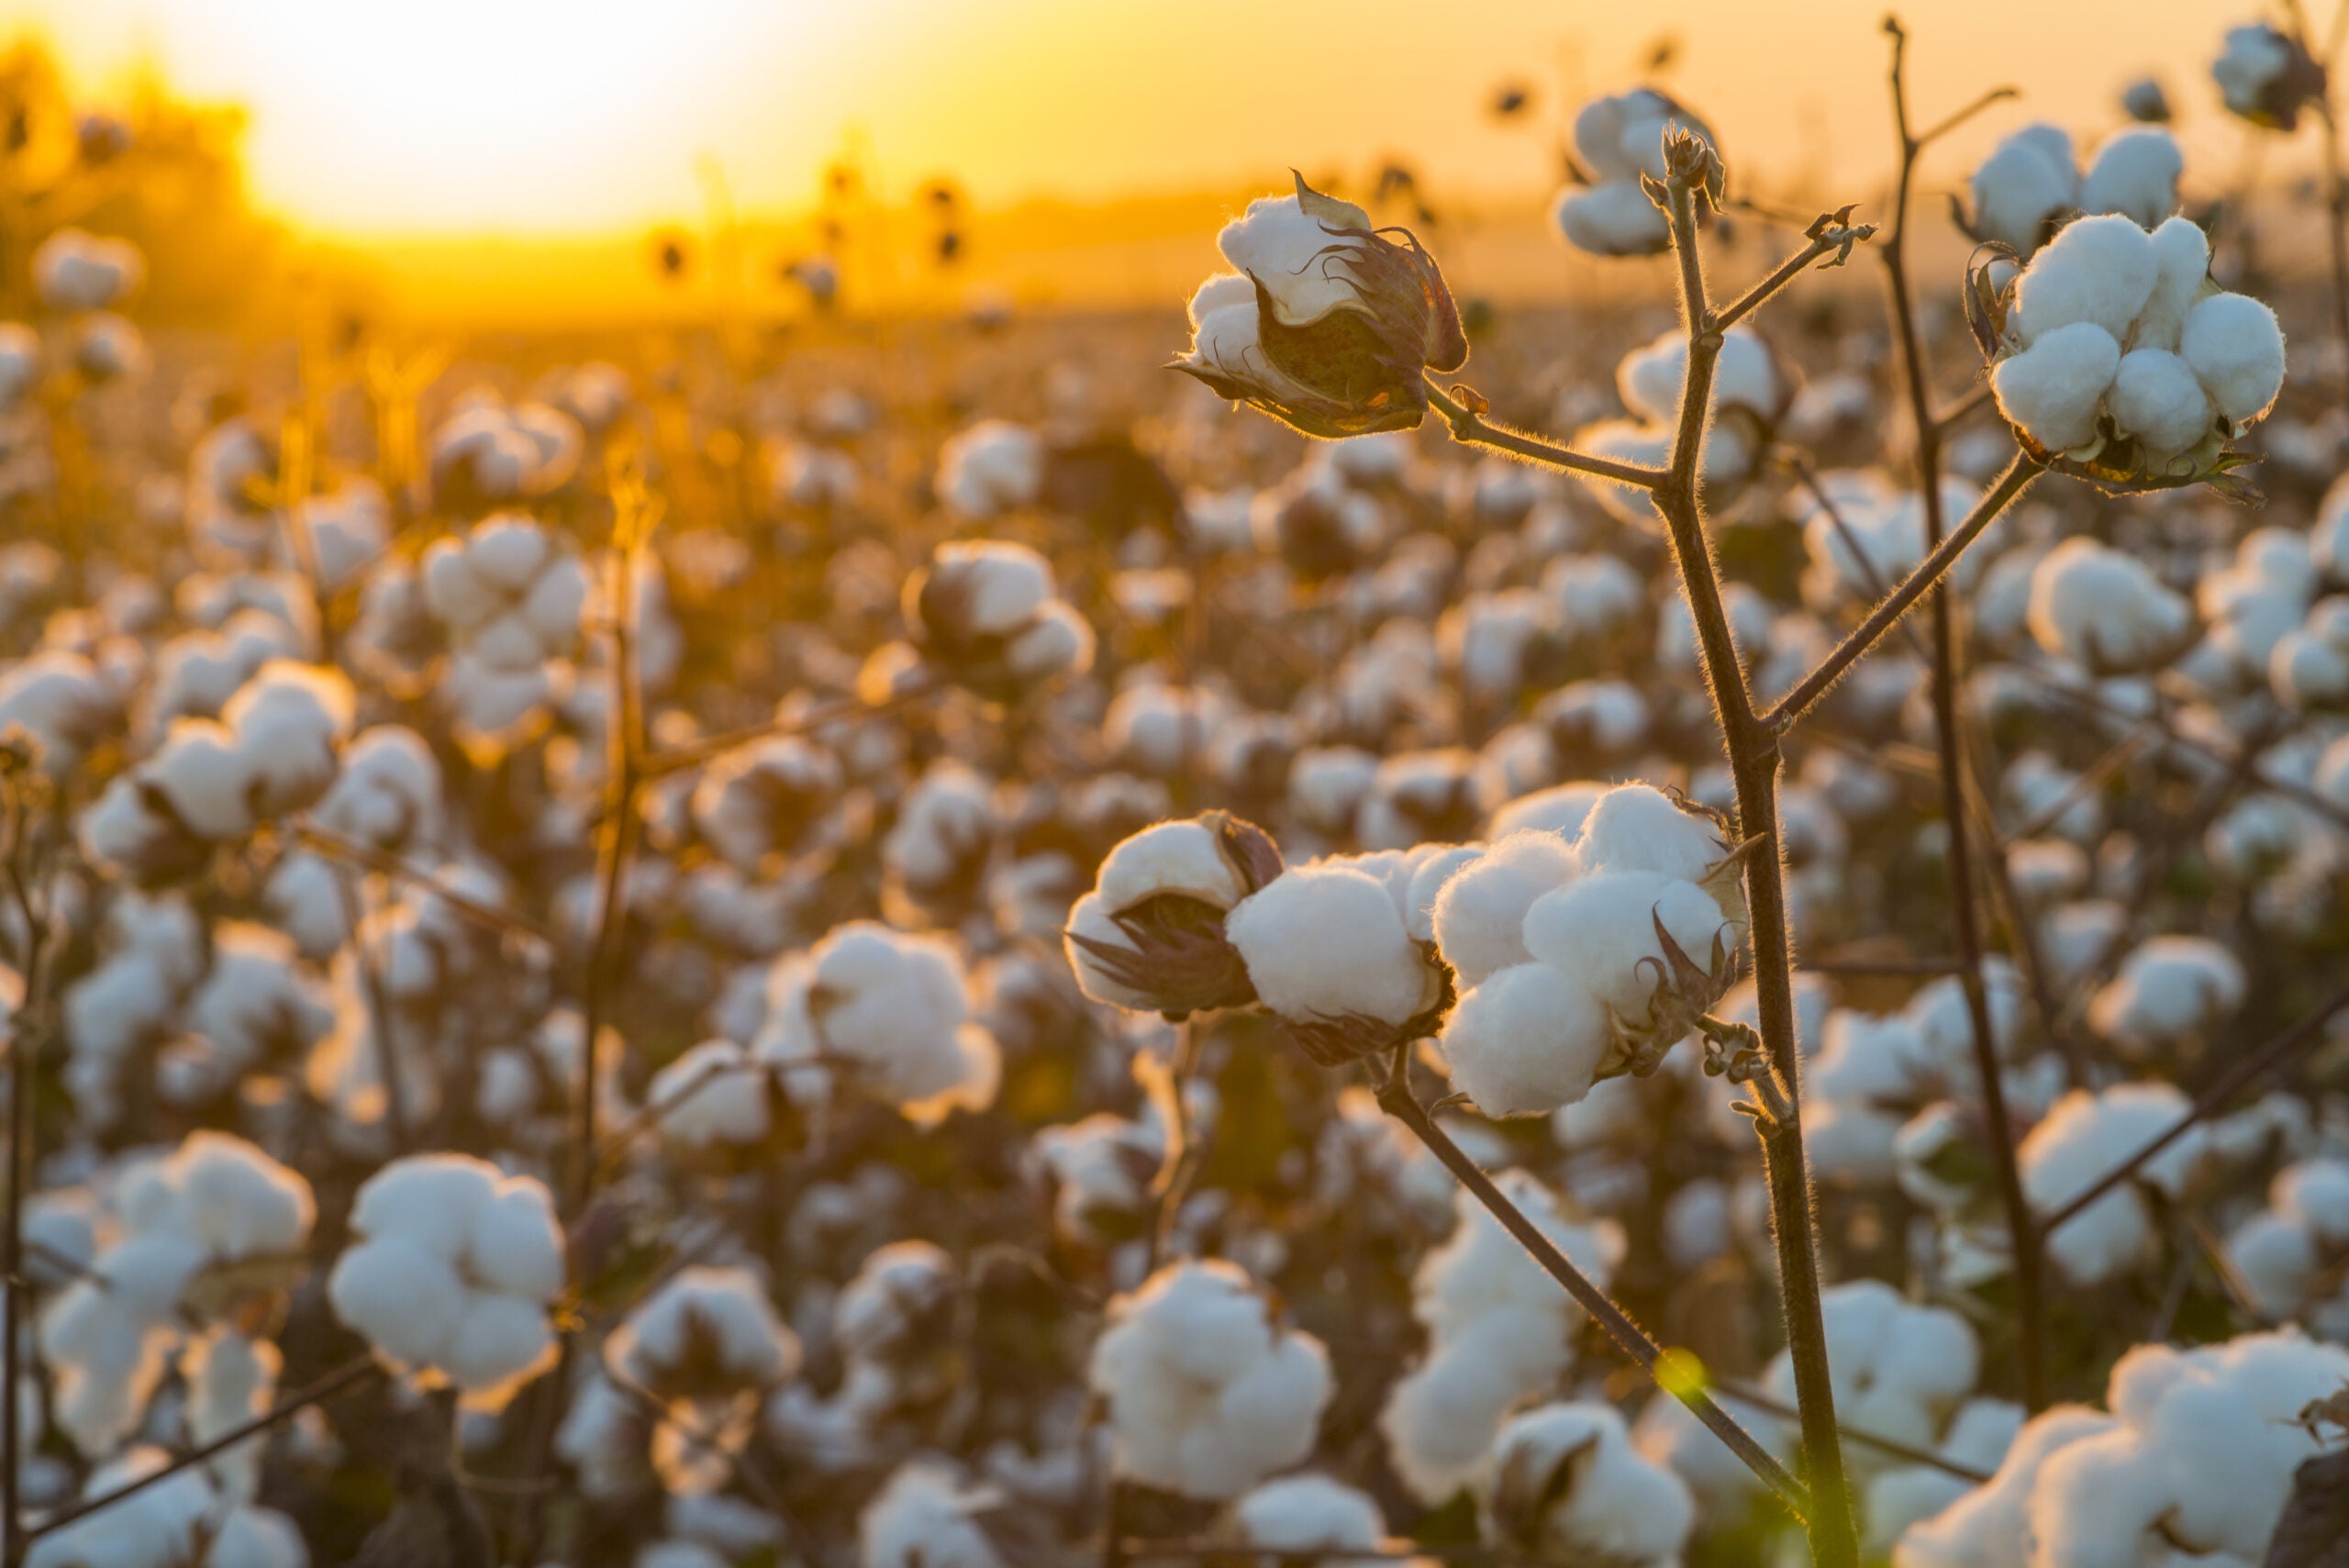 Cotton production, consumption invert as season nears close